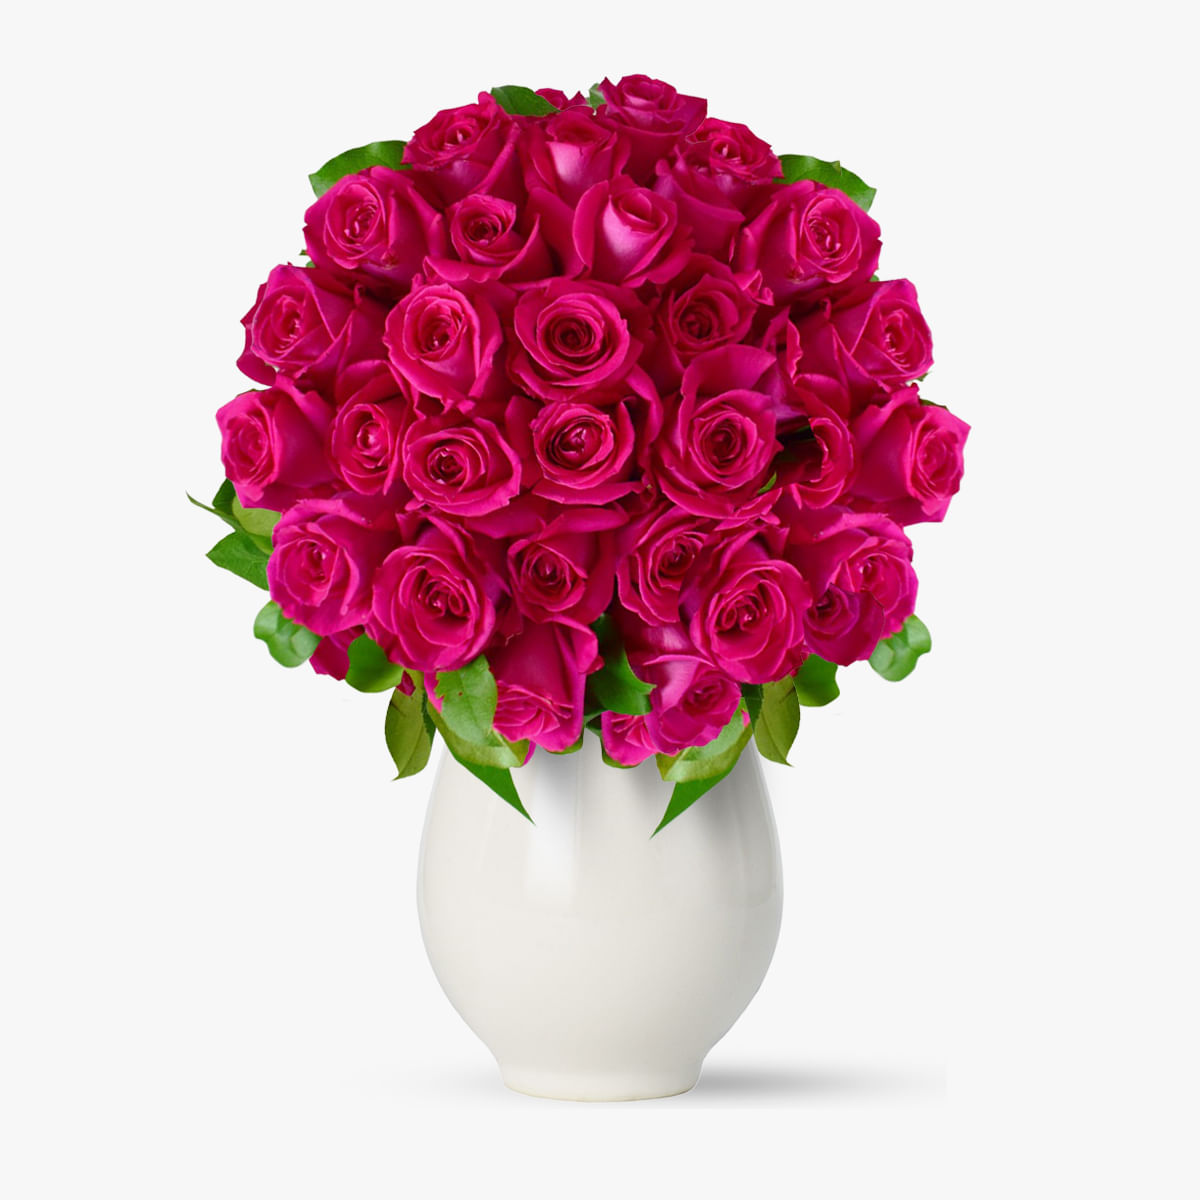 Buchet de 25 trandafiri roz – Standard Buchet imagine 2022